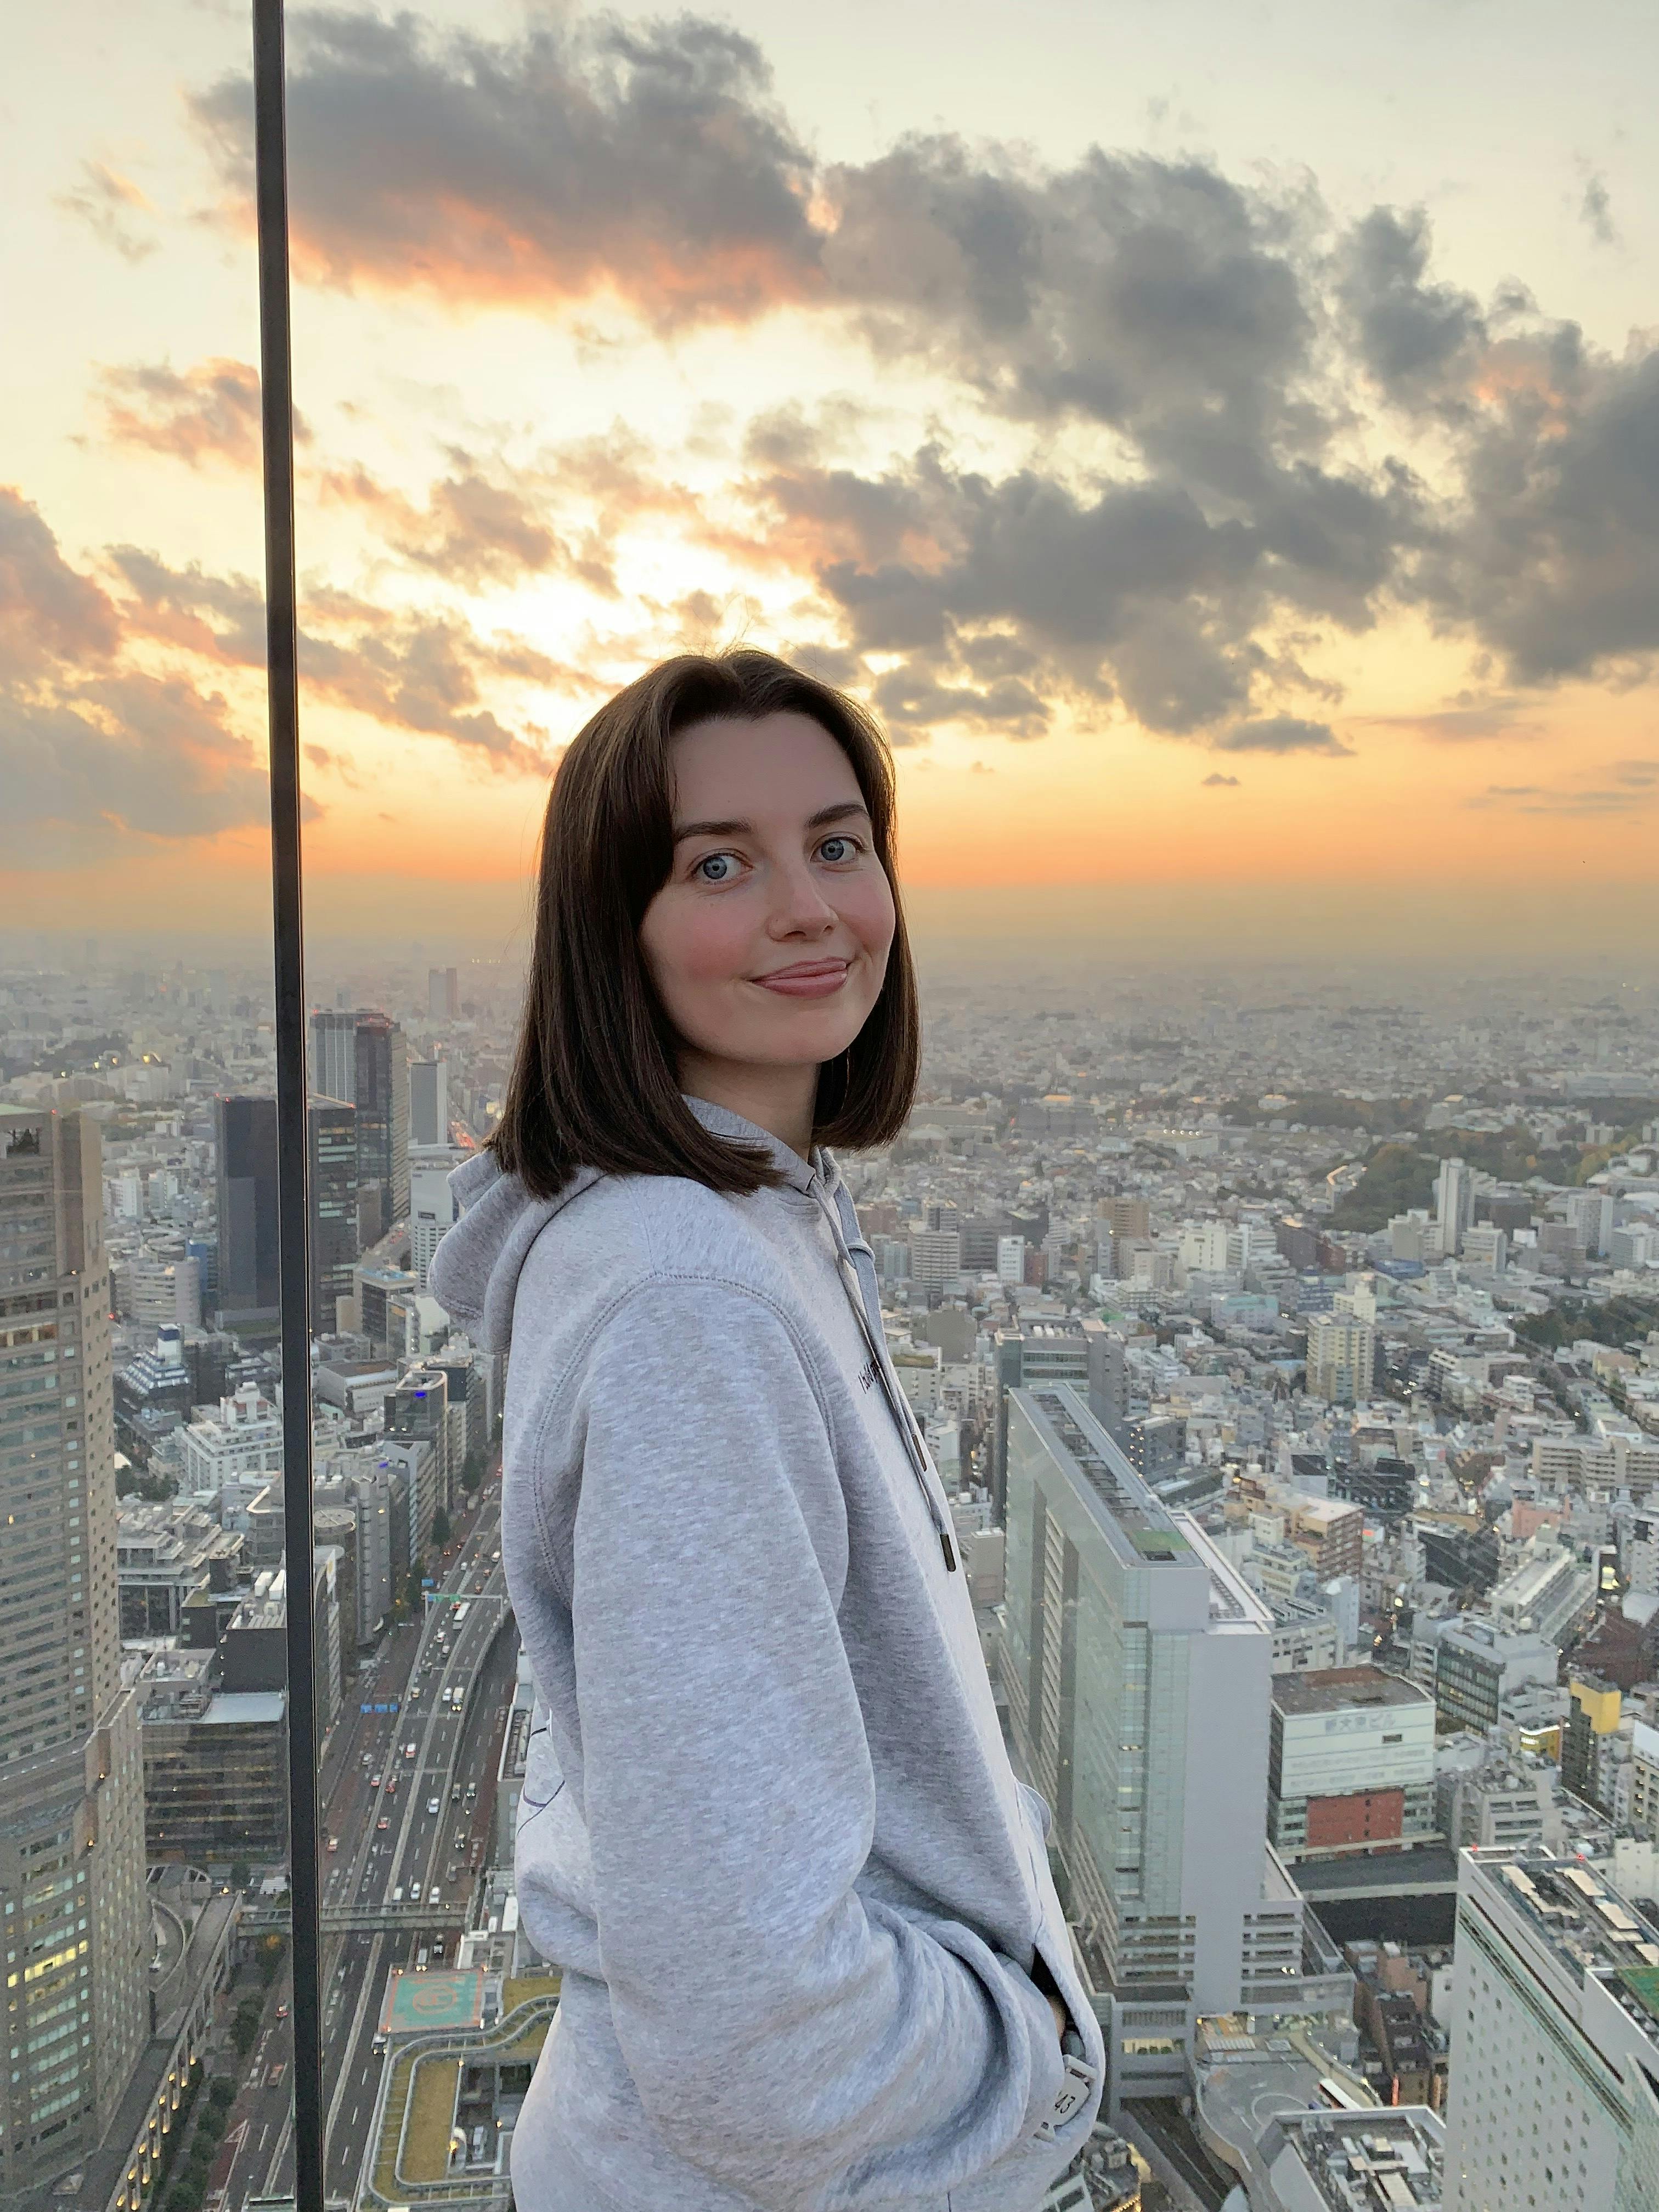 Michalea Zubarova at Tokyo Tower enjoying the view